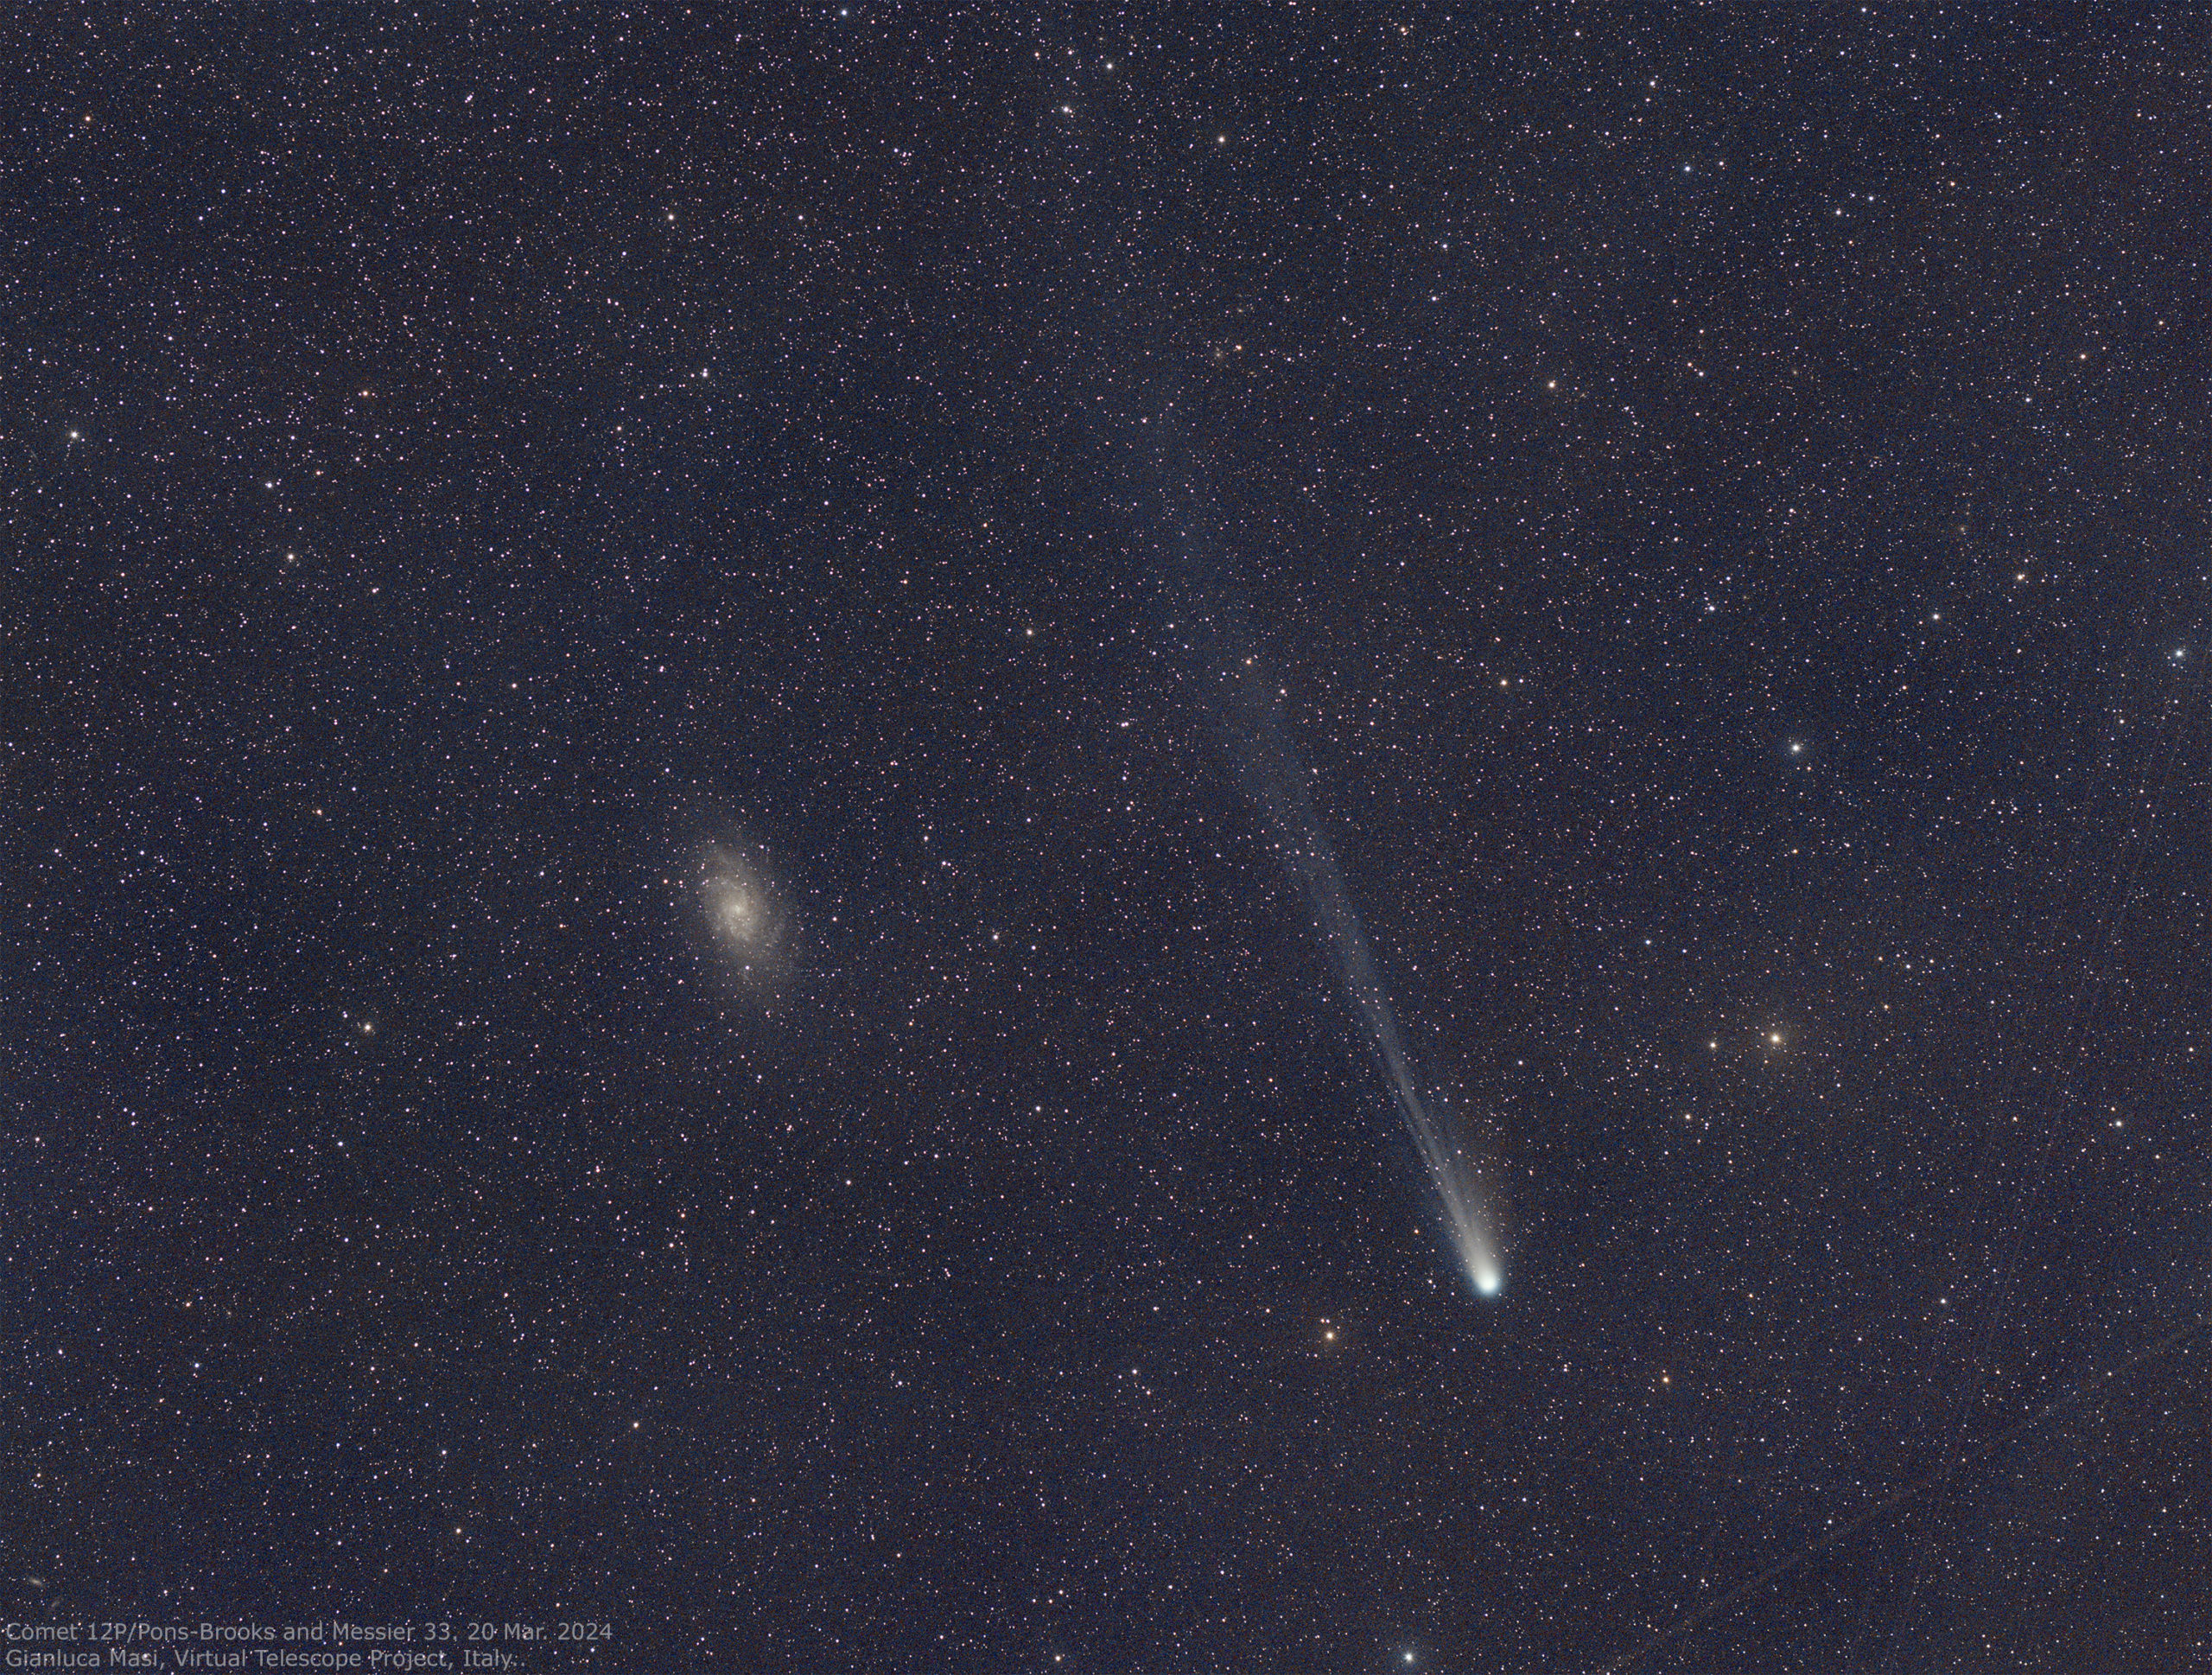 Comet 12P/Pons-Brooks and the Triangulum Galaxy (M 33). 20 Mar. 2024.